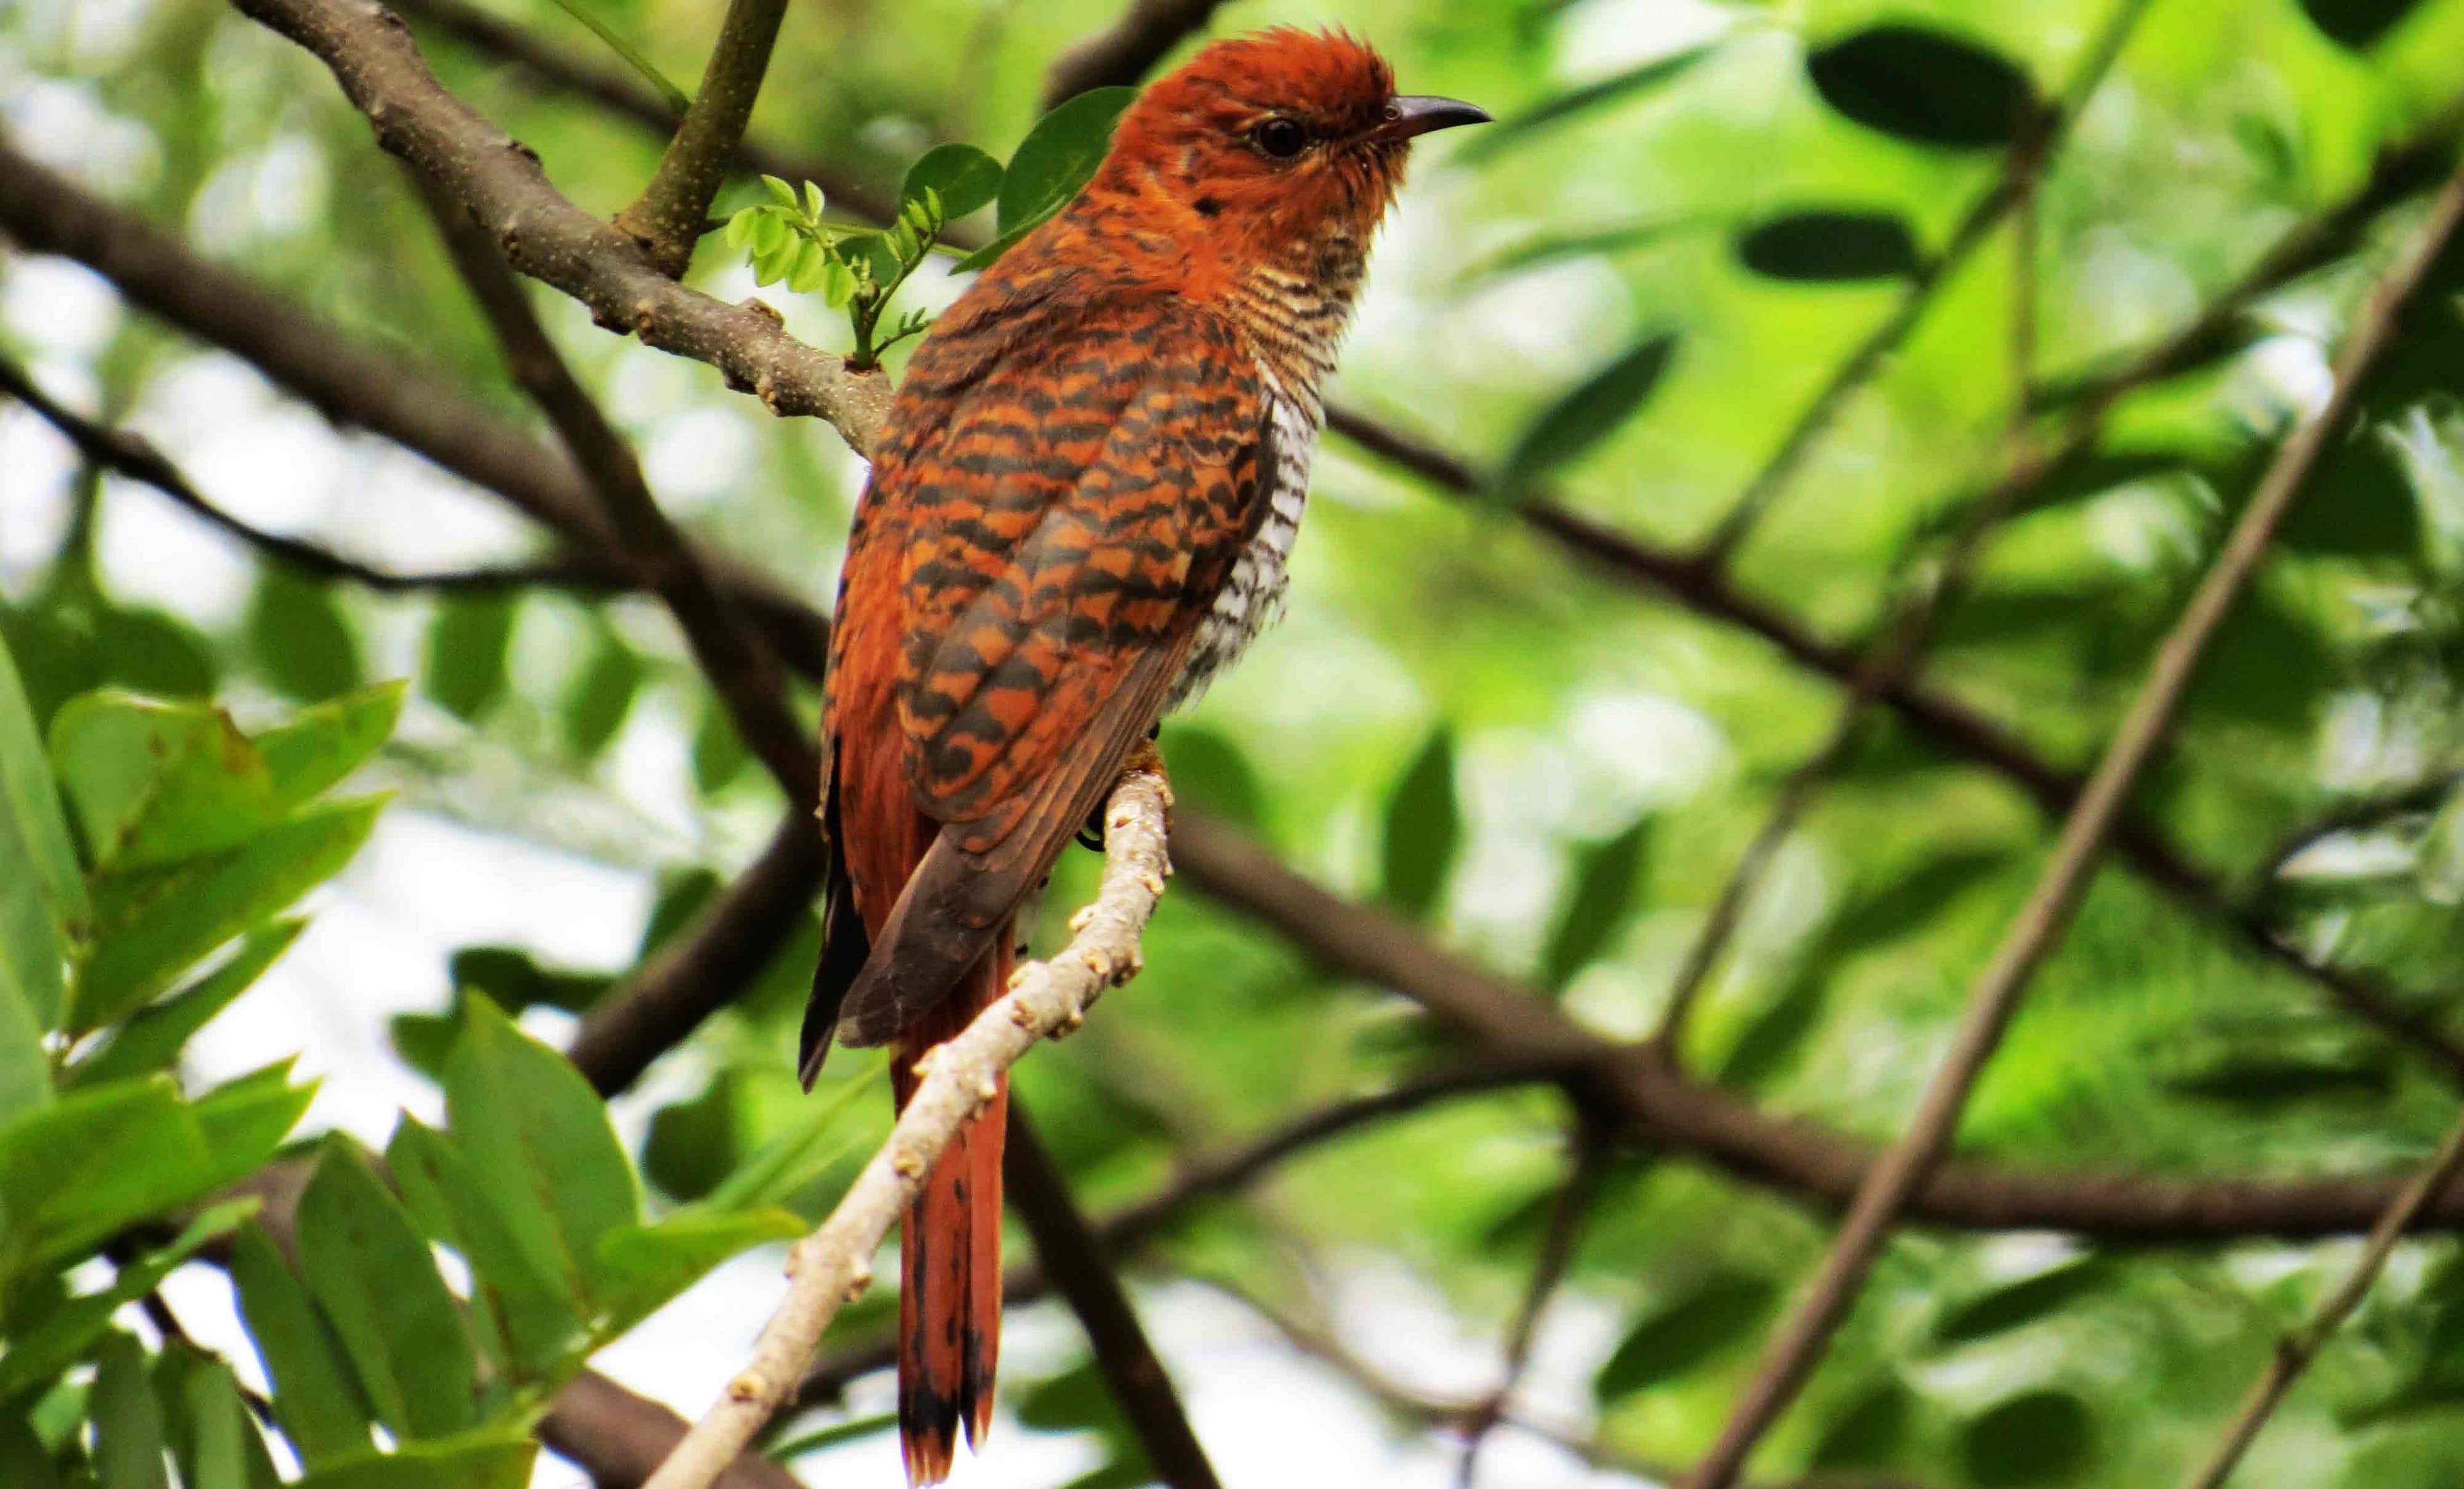 A photo of a Sri Lankan Endemic Bird named Cuckoo in Sri Lanka